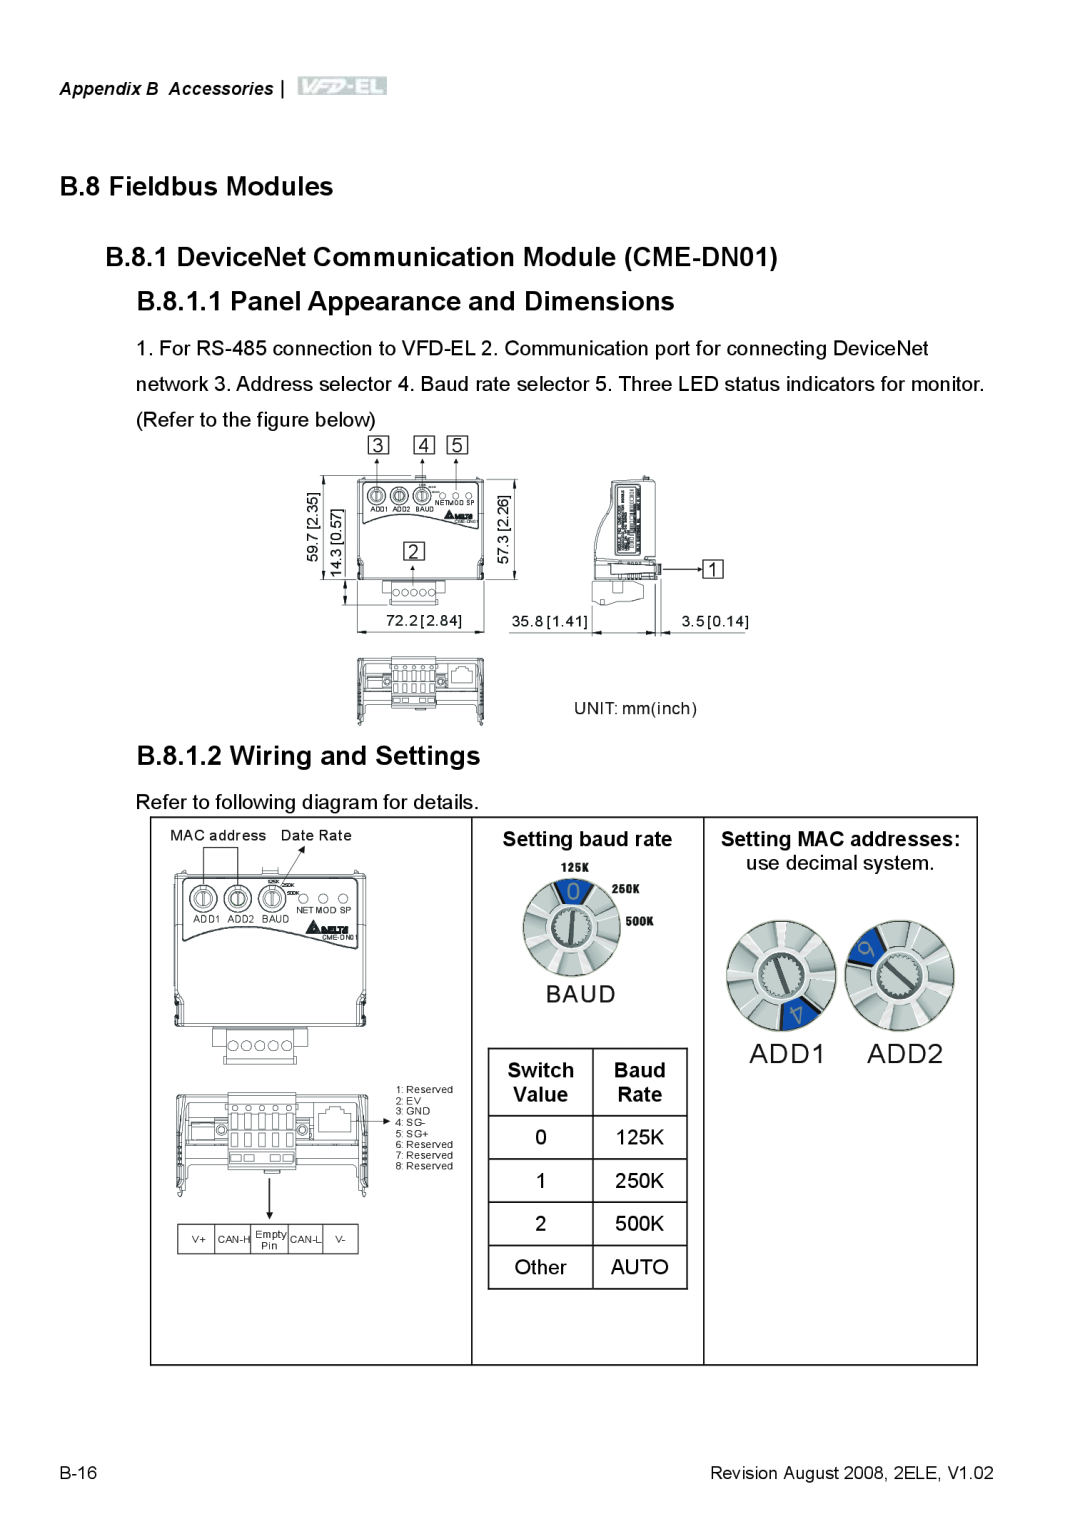 Delta Electronics VFD-EL B.8 Fieldbus Modules B.8.1 DeviceNet Communication Module CME-DN01, B.8.1.2 Wiring and Settings 